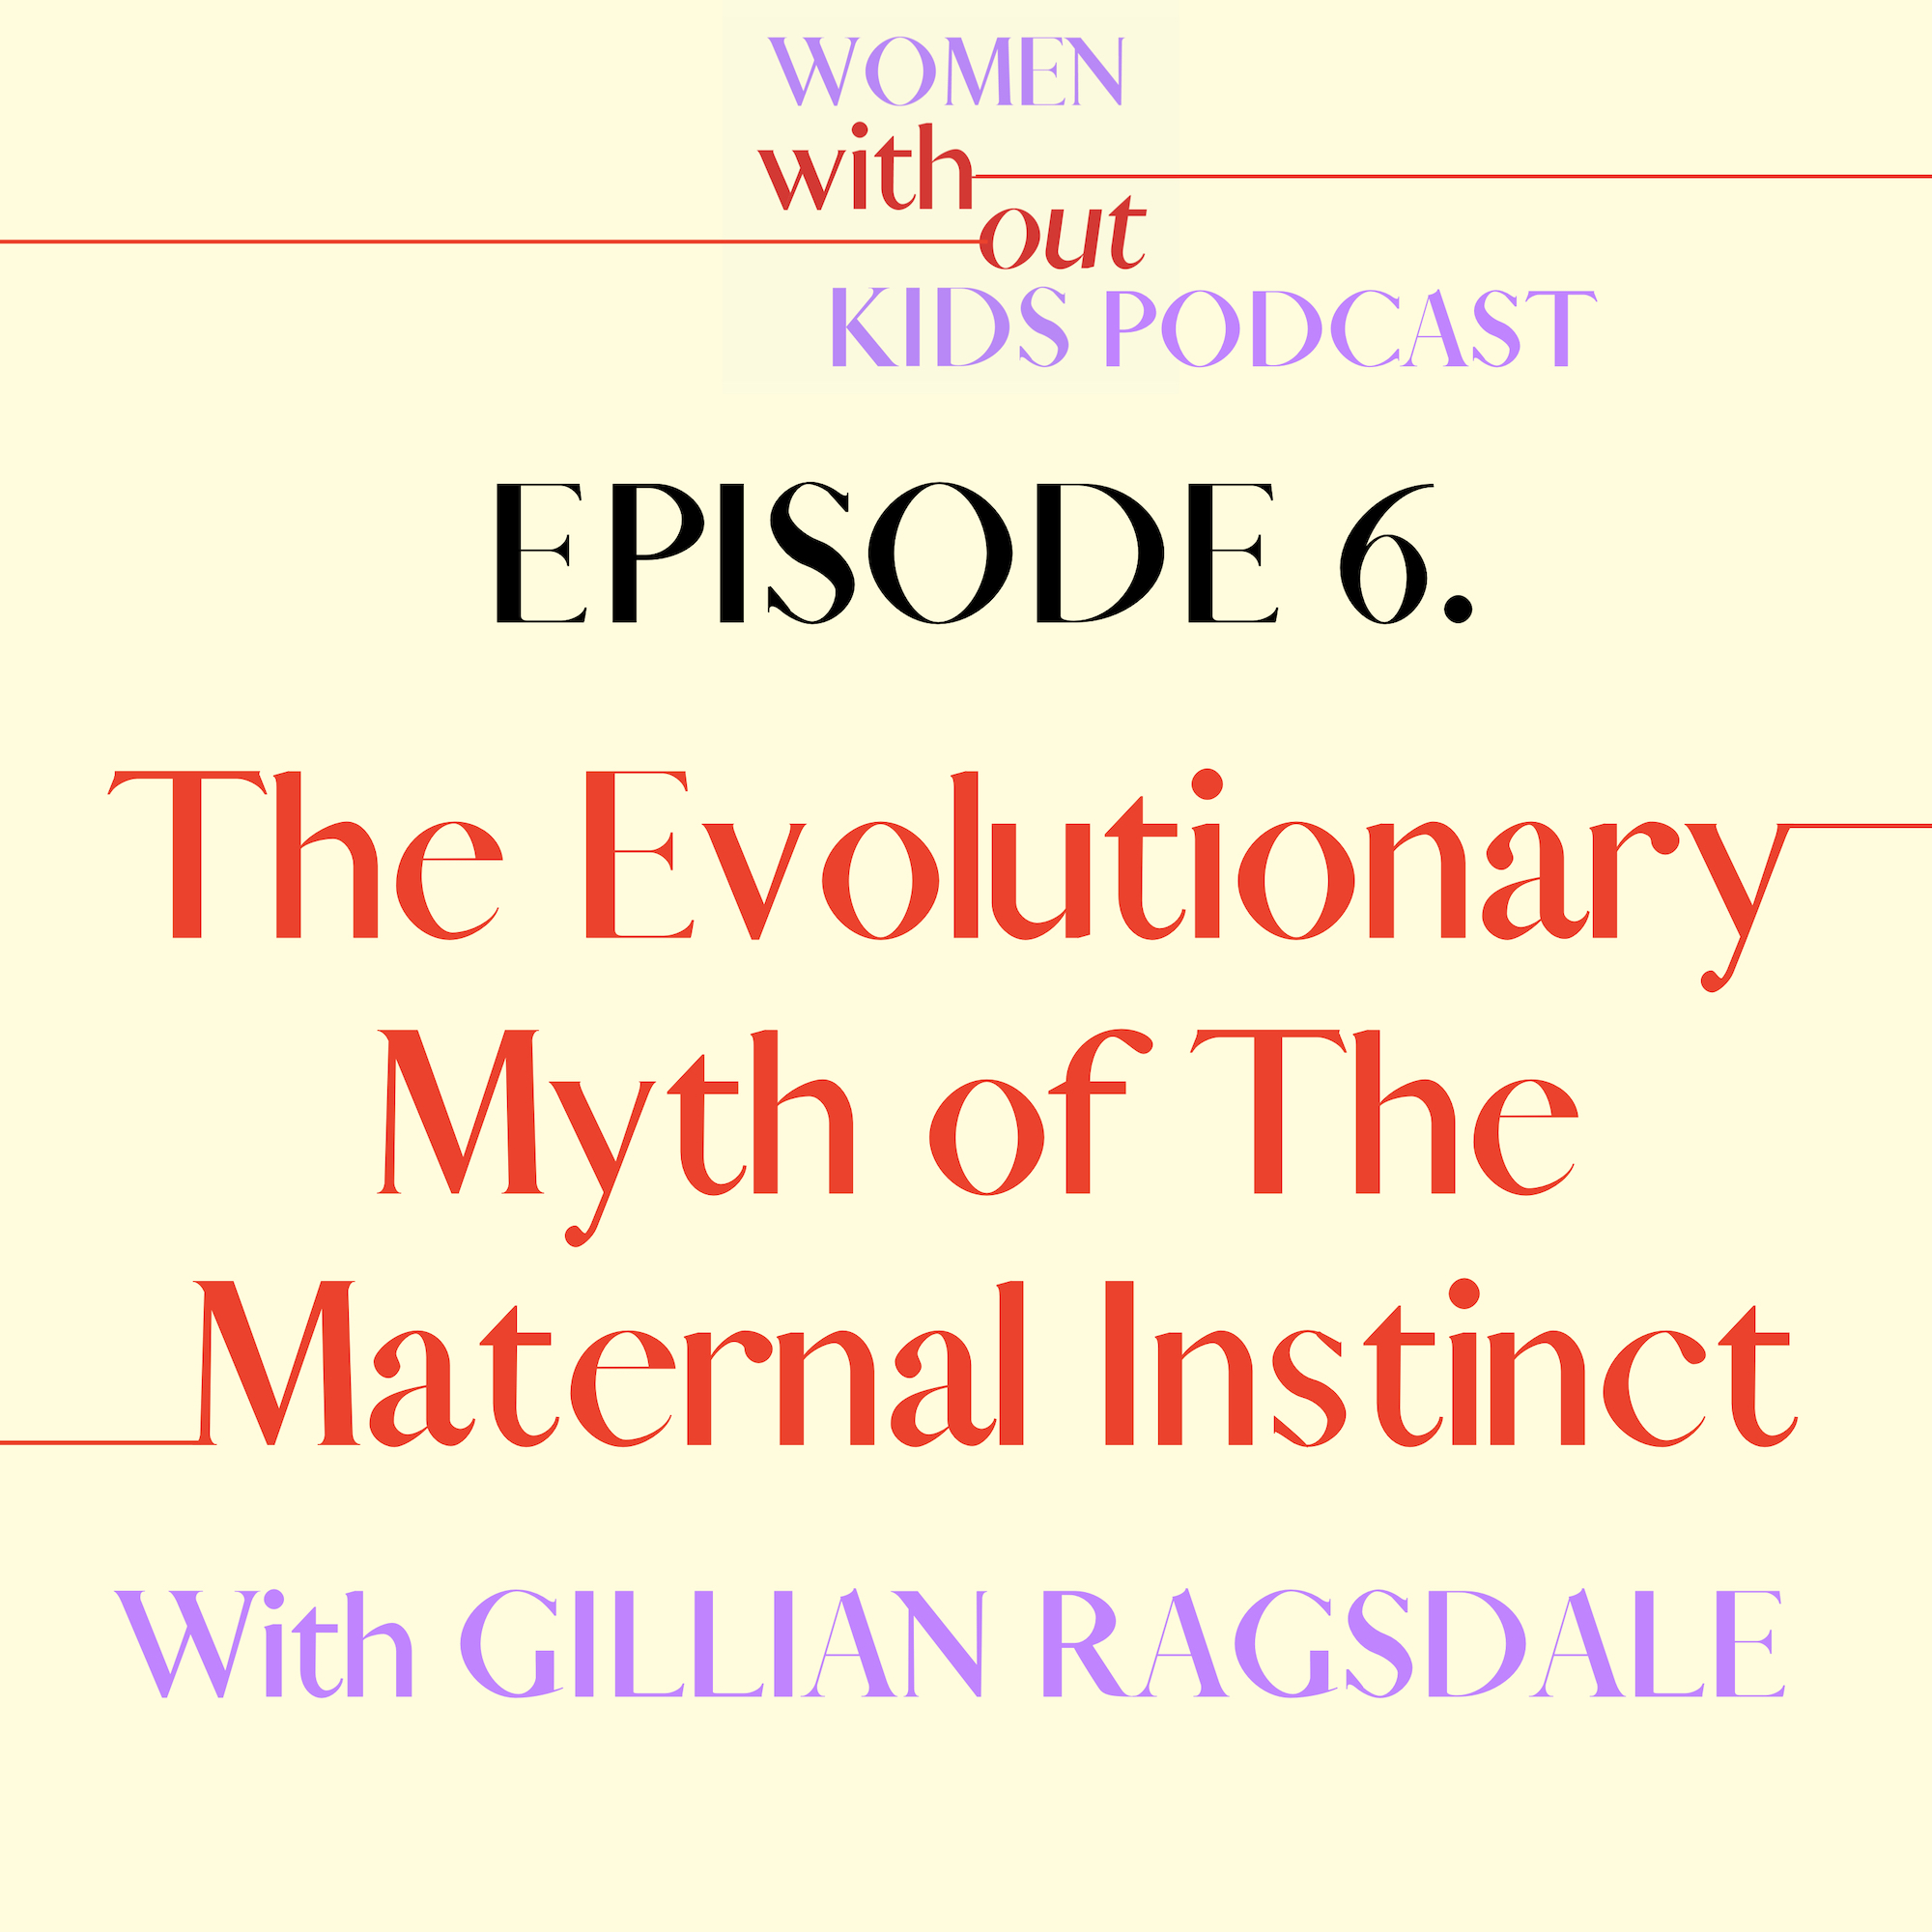 maternal instinct myth women without kids podcast gillian ragsdale ruby warrington